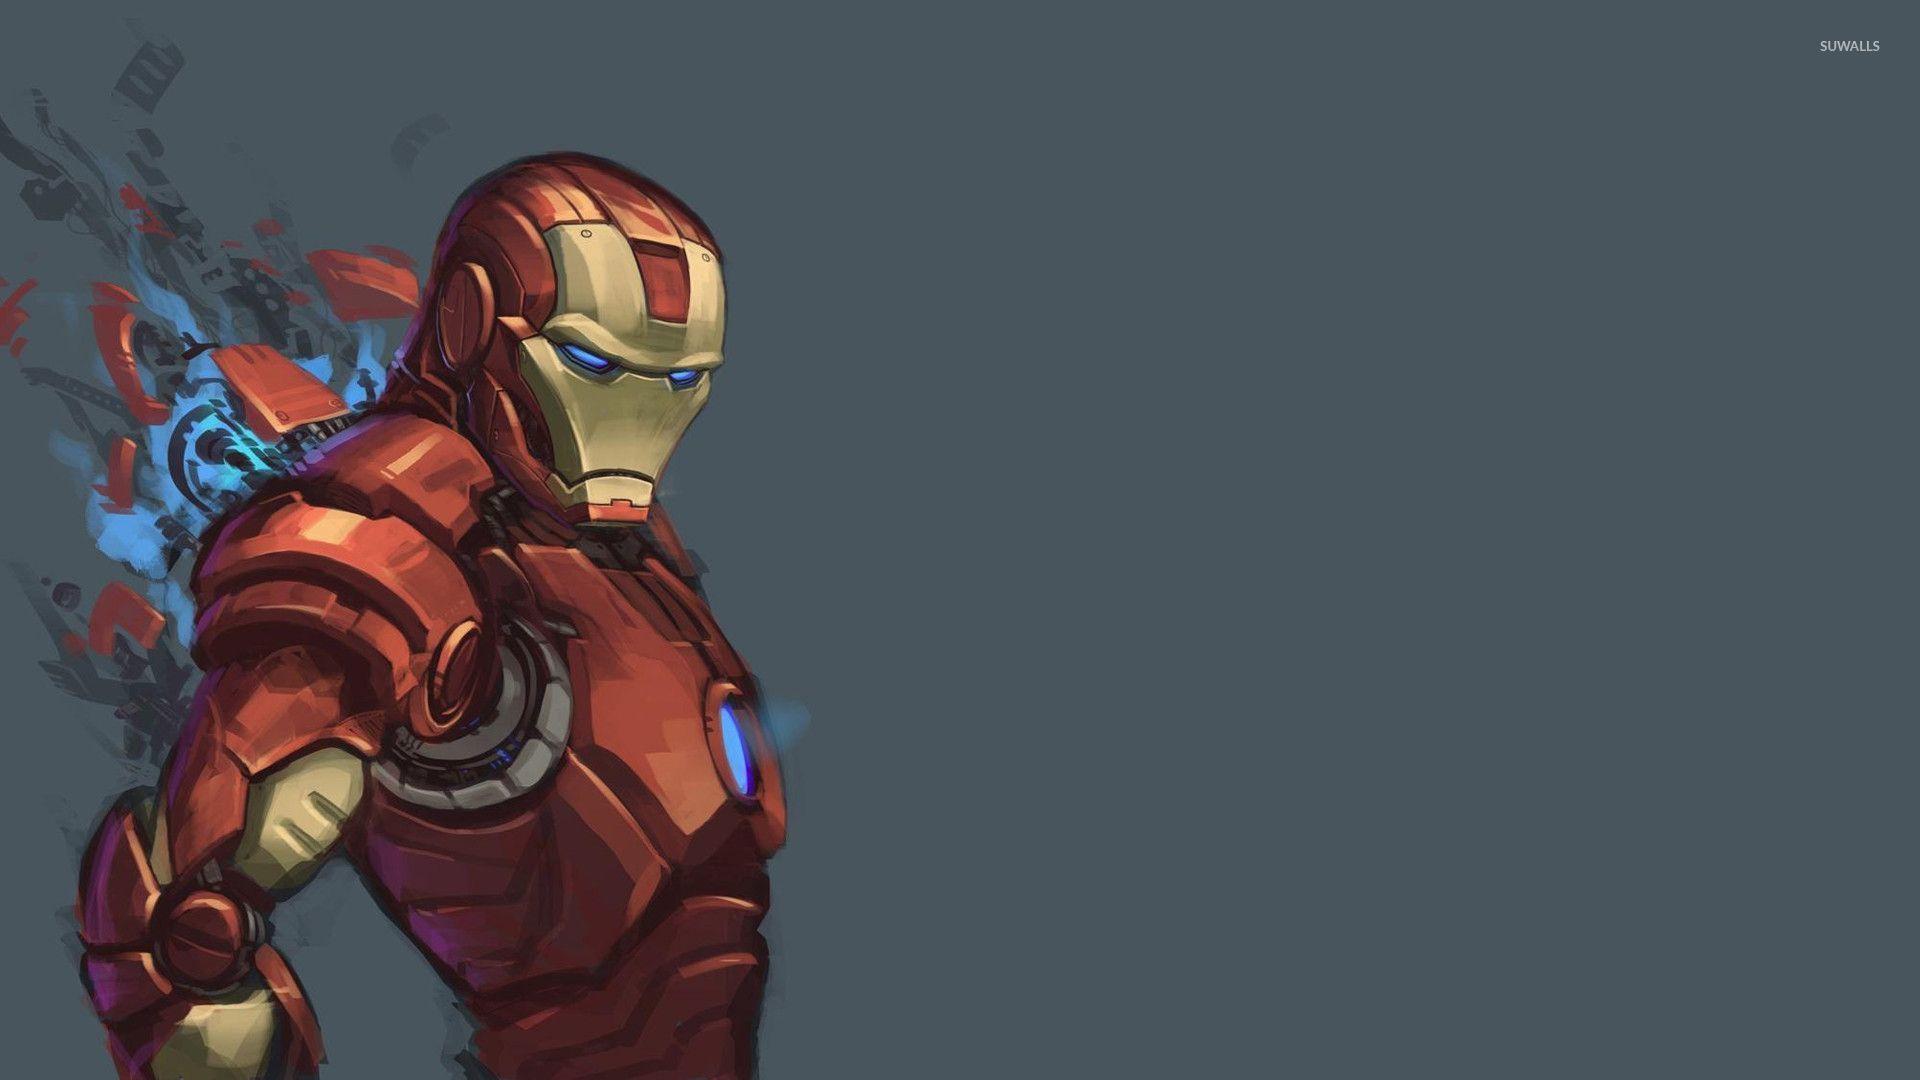 I Am Iron Man Art Wallpapers